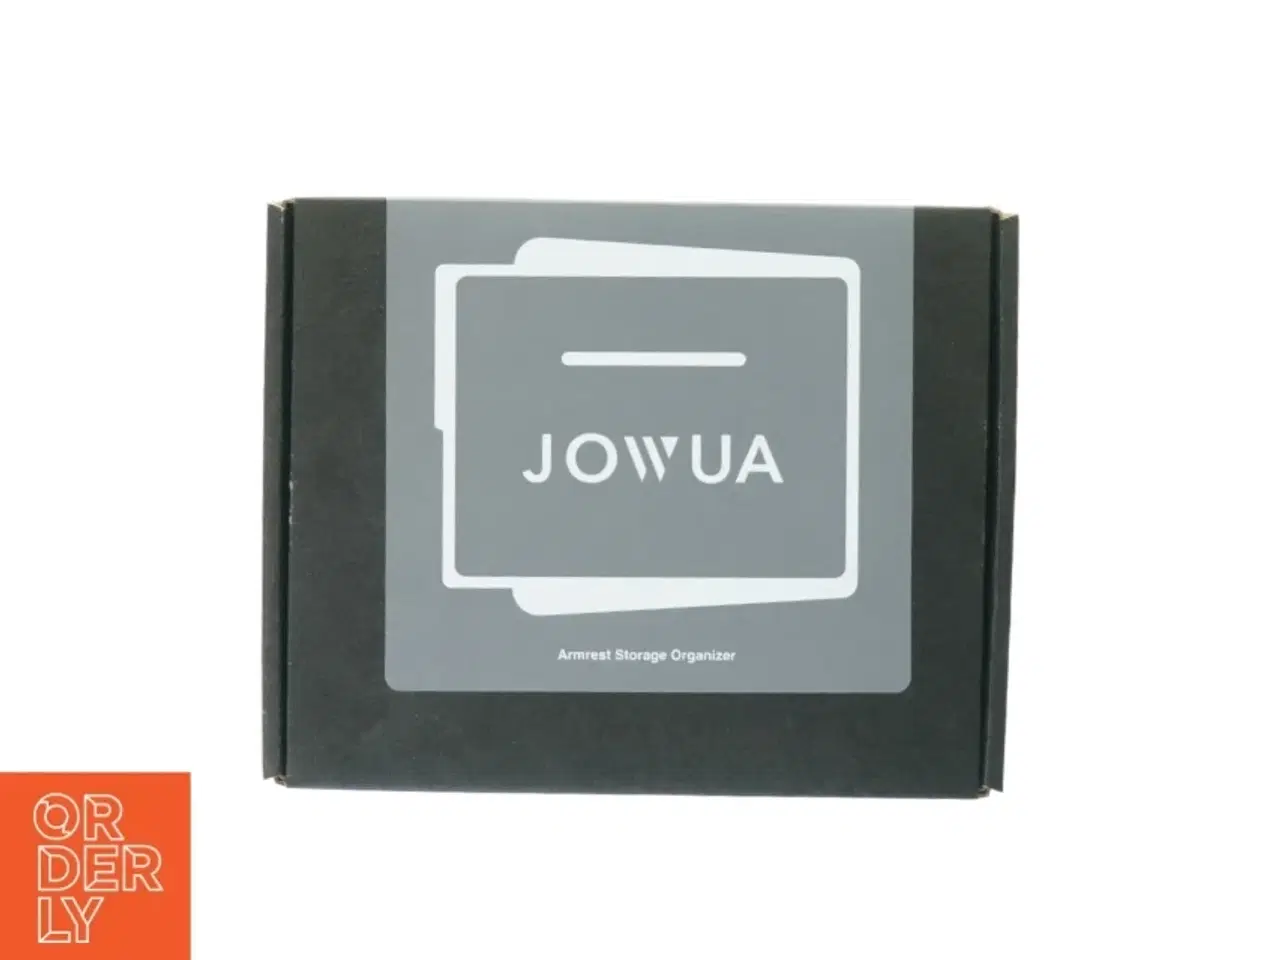 Billede 1 - Armrest storage organizer fra Jowua (str. 22 x 18 cm)